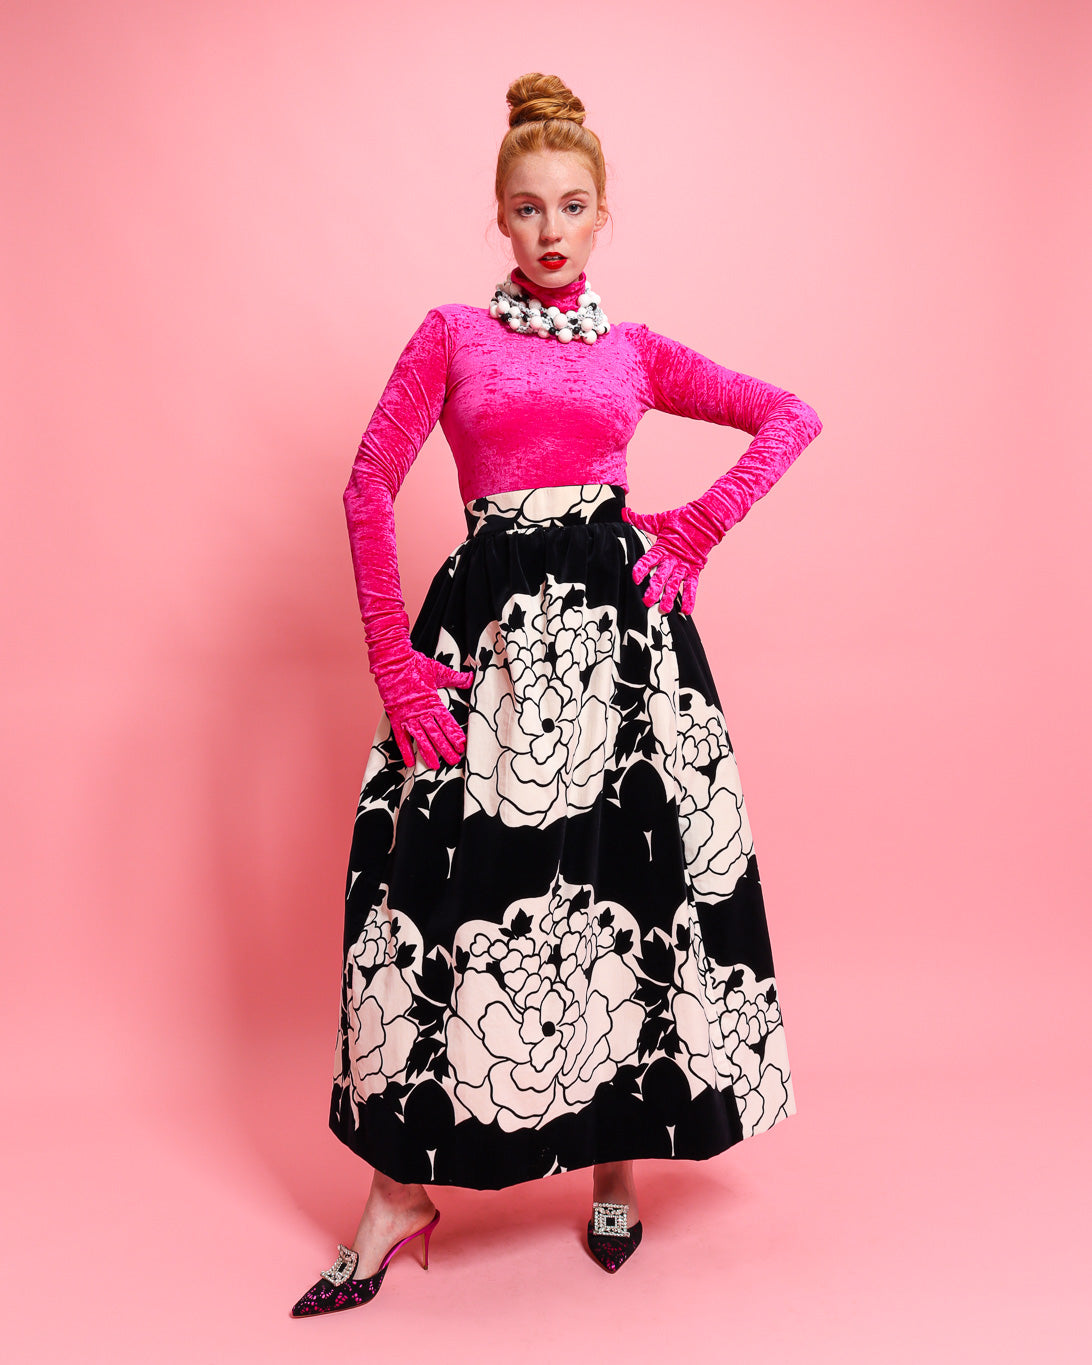 Velvet Floral Ball Skirt by Saks Fifth Avenue on model on pink background @recessla